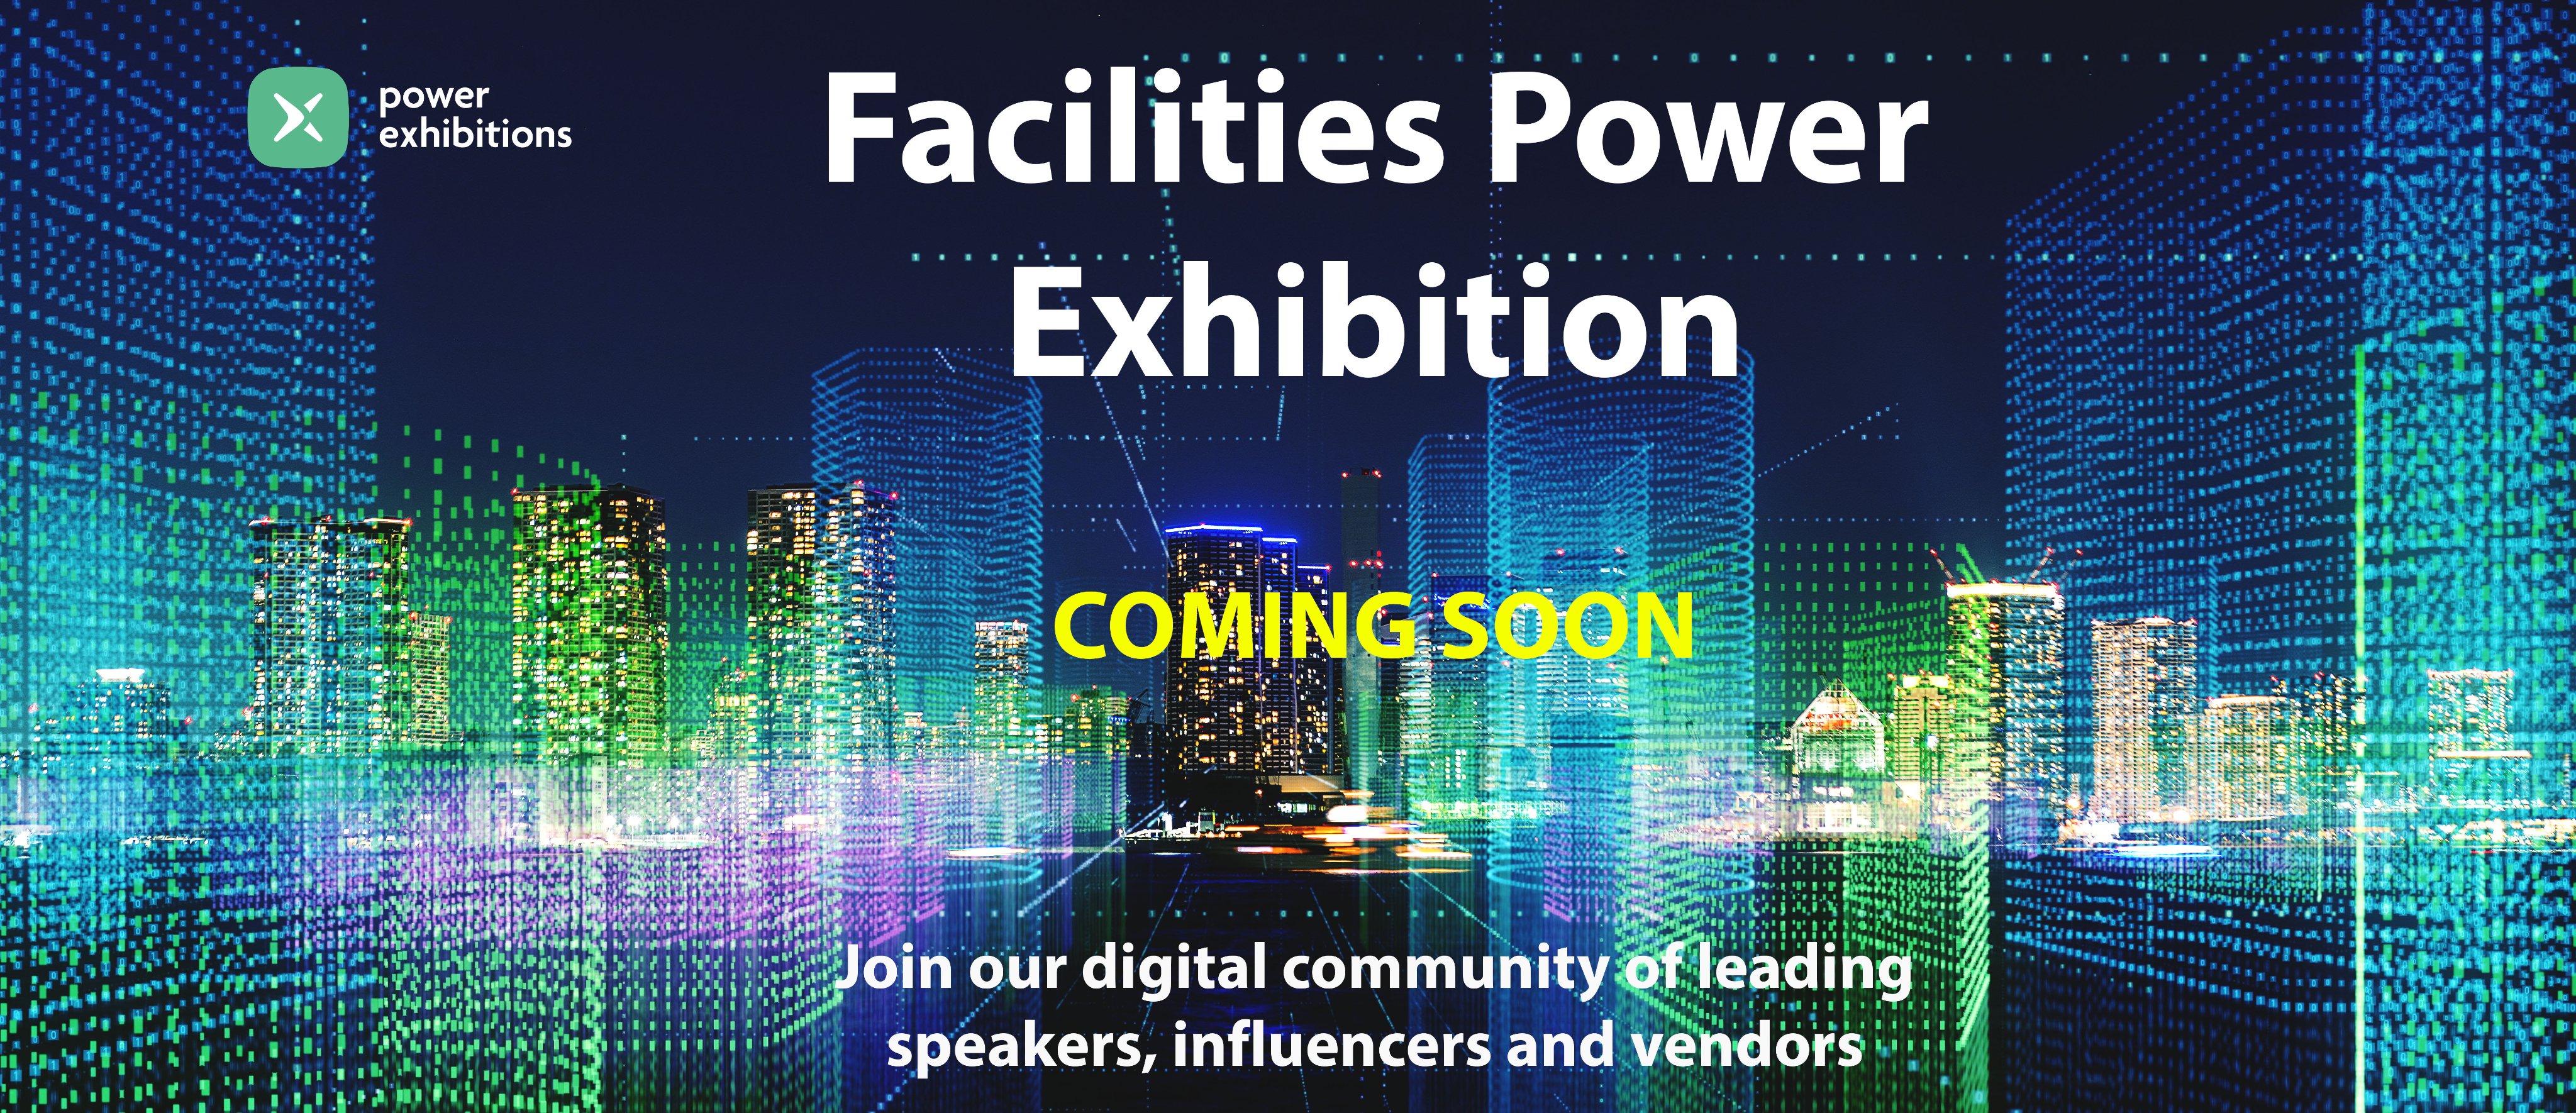 Facilities Power Exhibition (facilitiespower) / Twitter